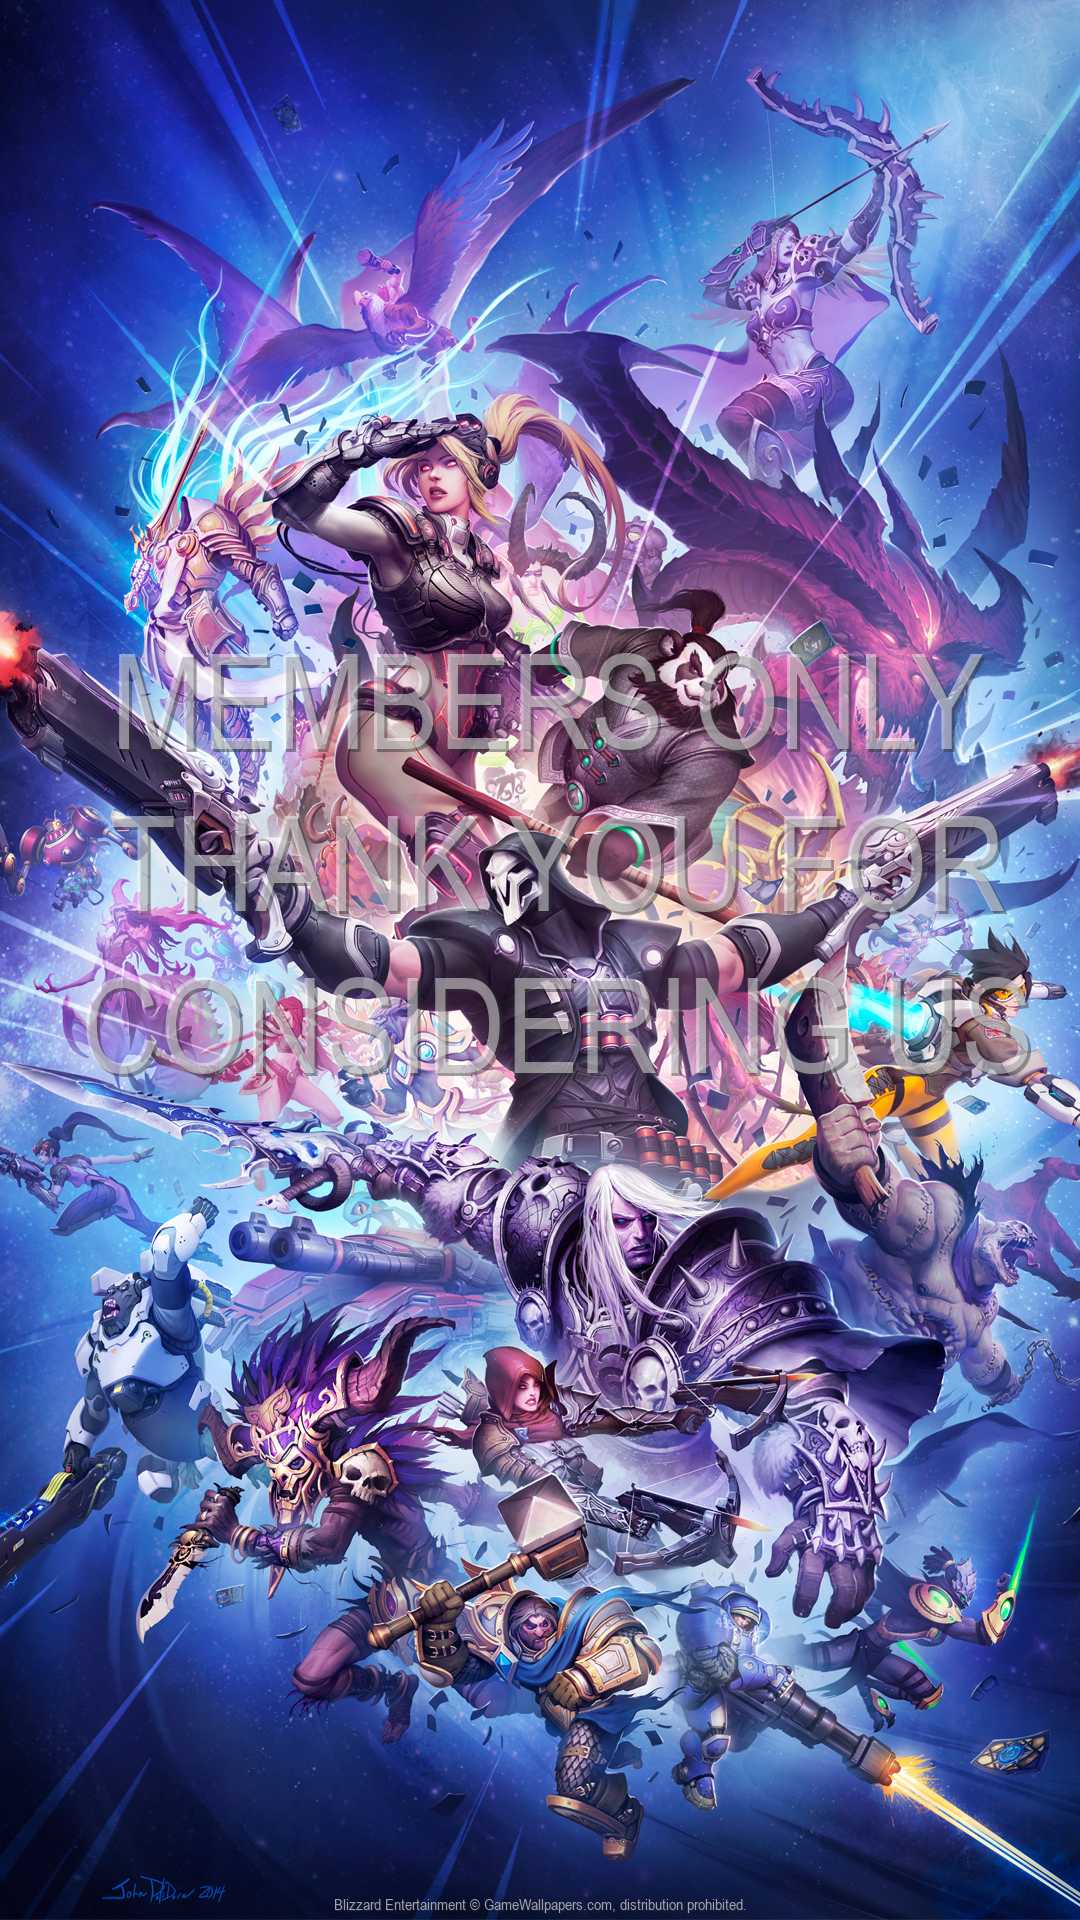 Blizzard Entertainment 1080p%20Vertical Mobile wallpaper or background 02